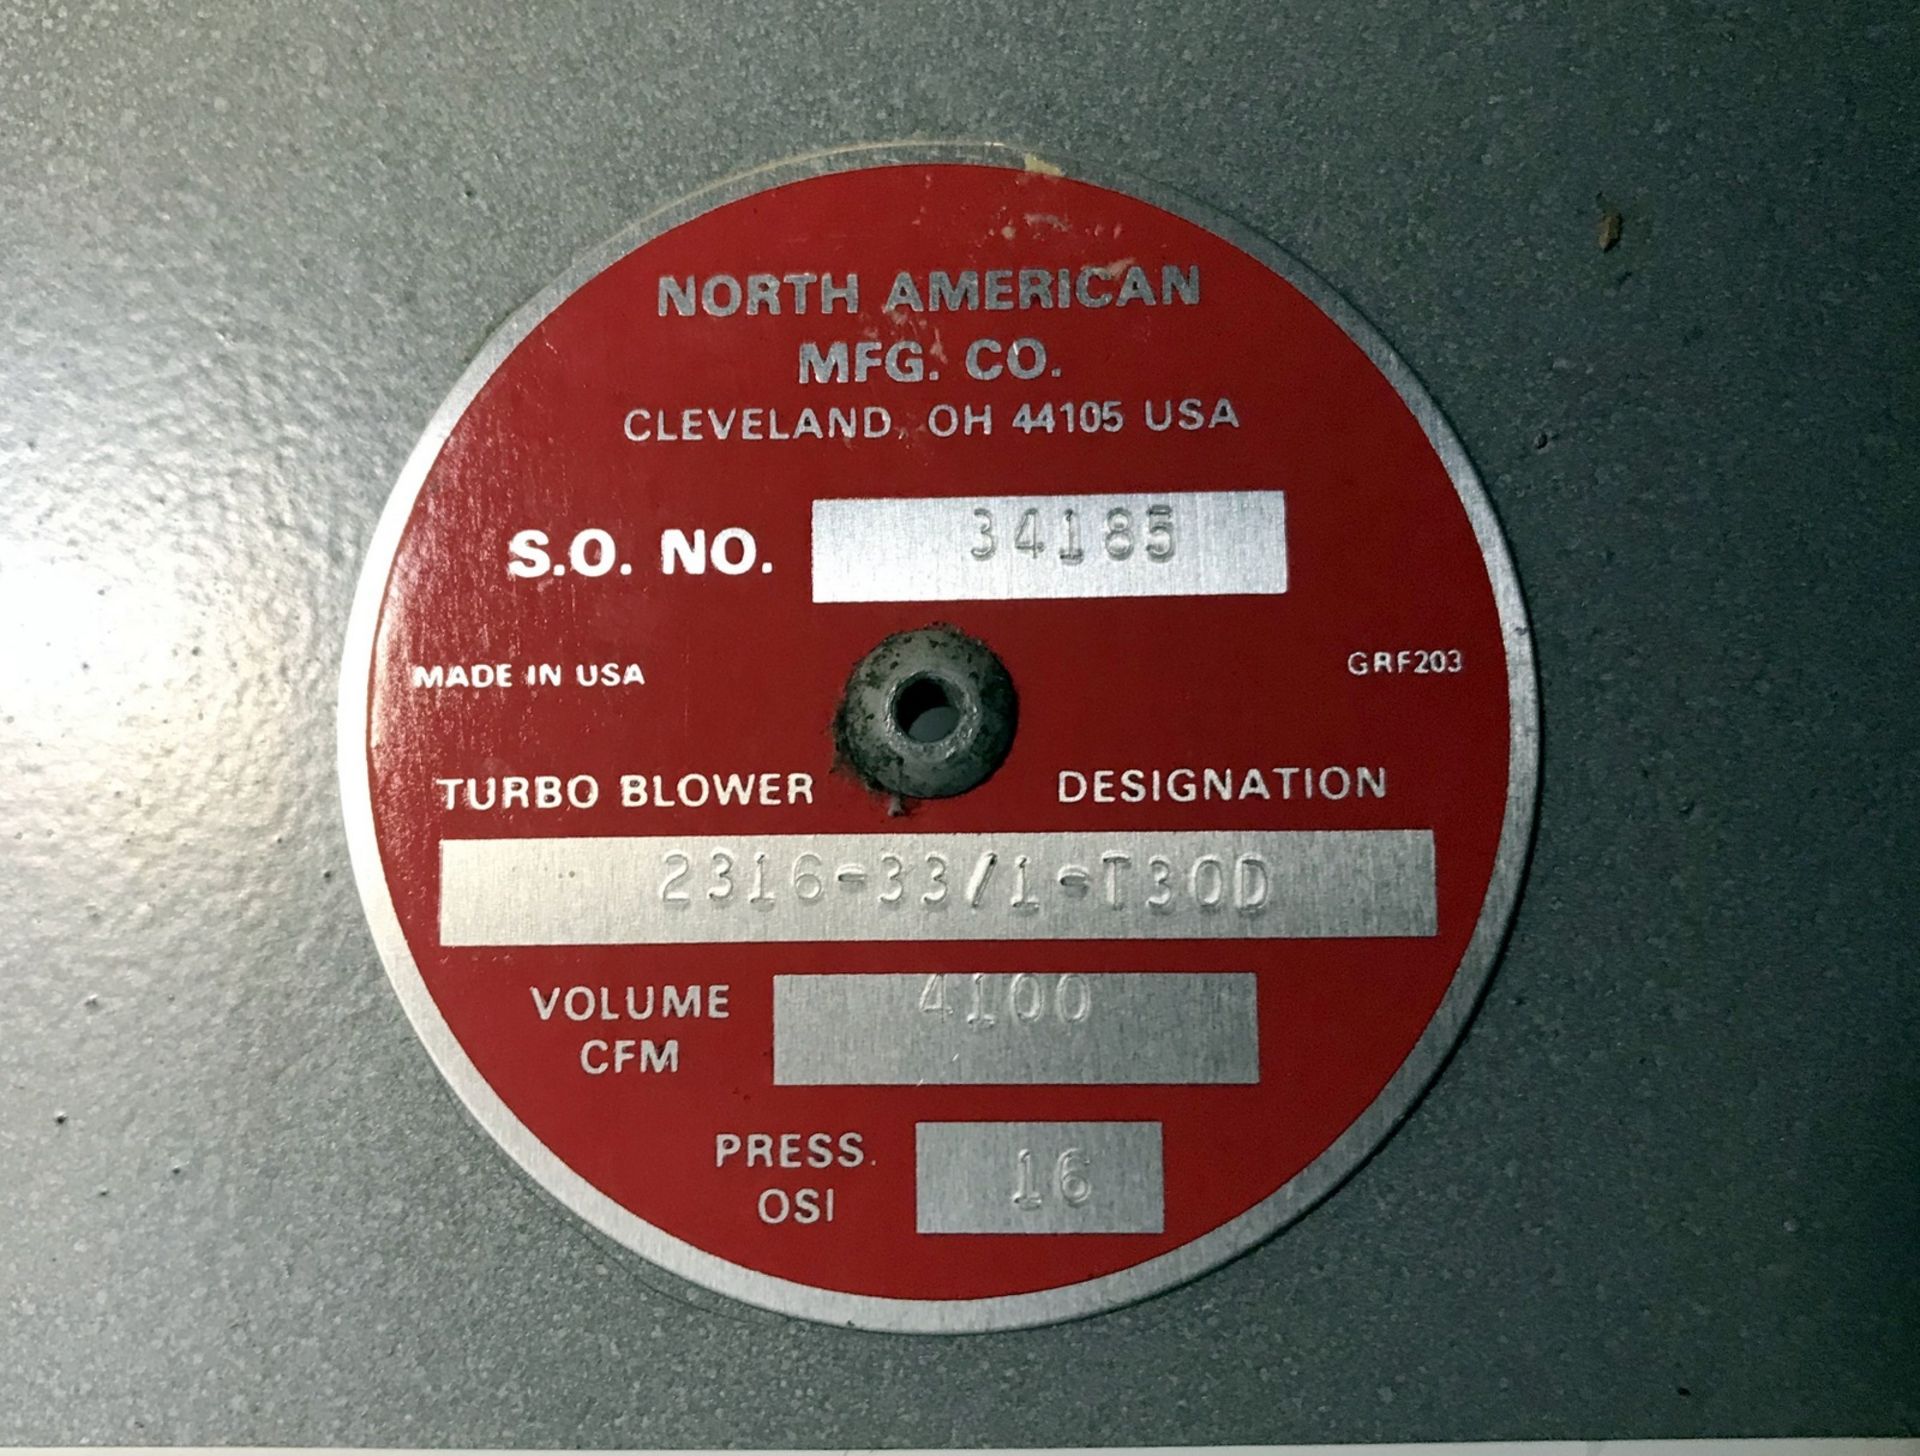 North American Mfg. Mdl. 2316-33/1-T30D Turbo Blower, Volume 4100 CFM, Pressure 16 OSI, Fan 48" - Image 9 of 9